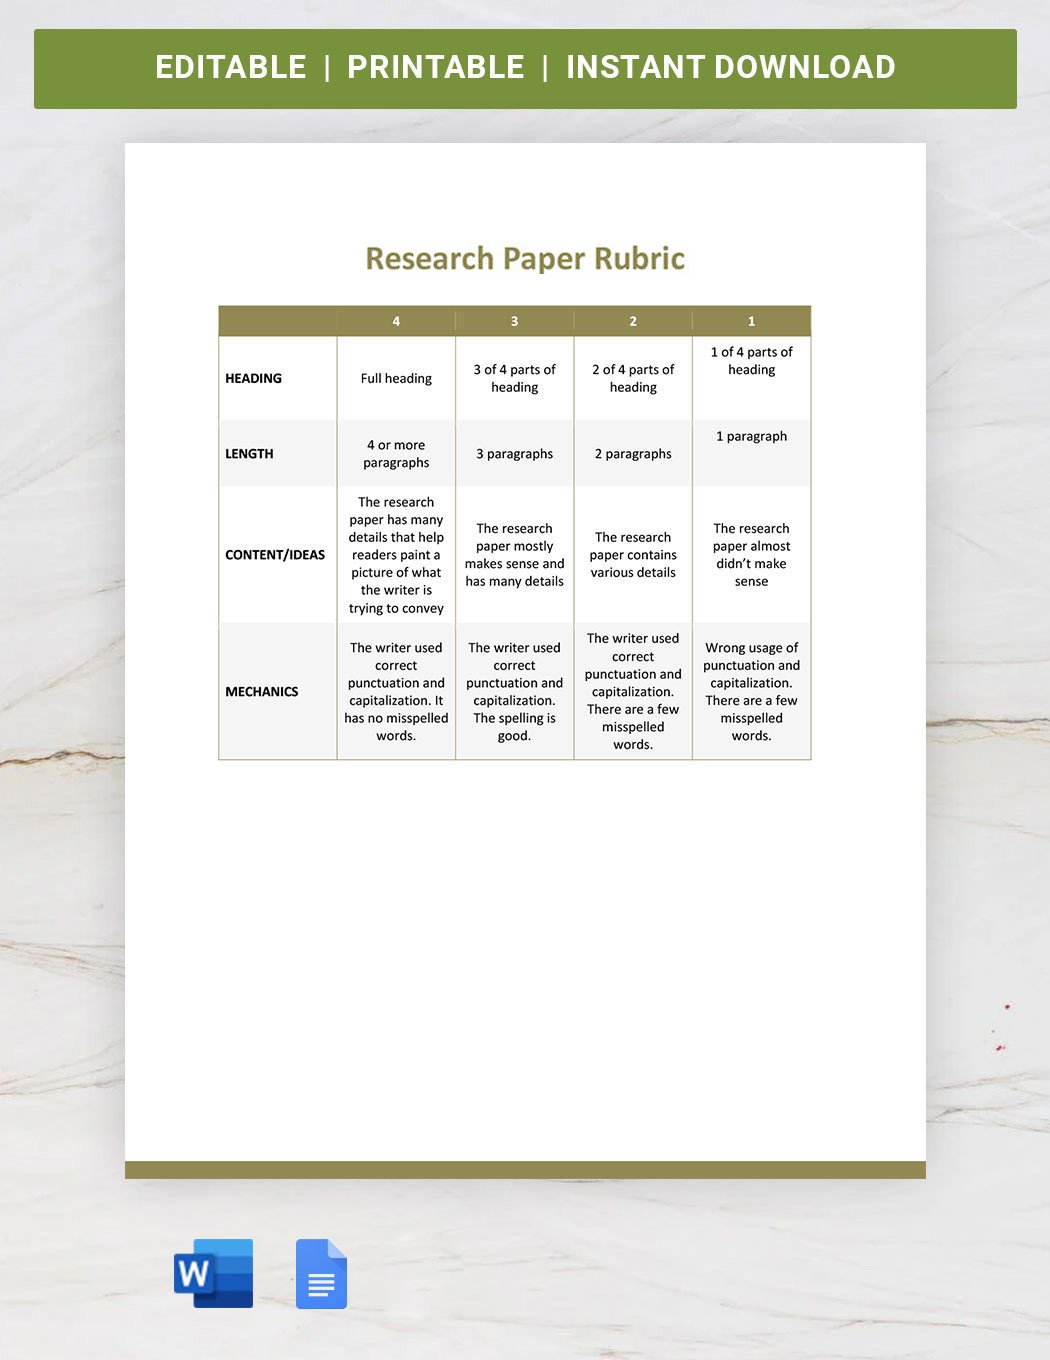 Research Paper Rubric Template